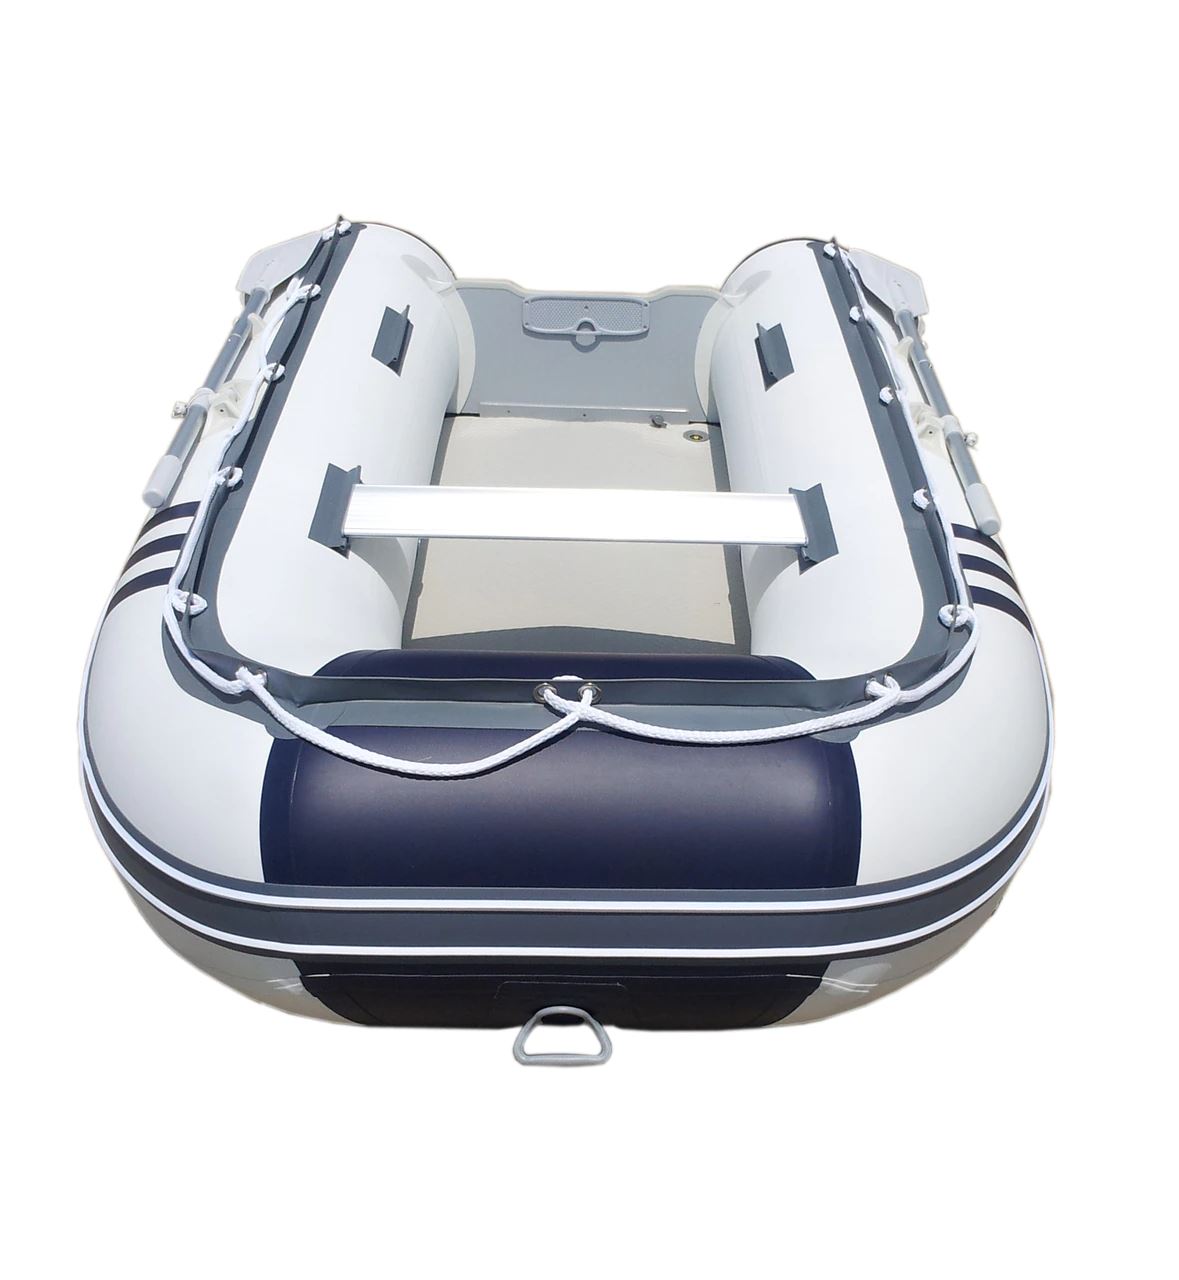 Newport Santa Cruz Inflatable Boat - 10ft Air Floor